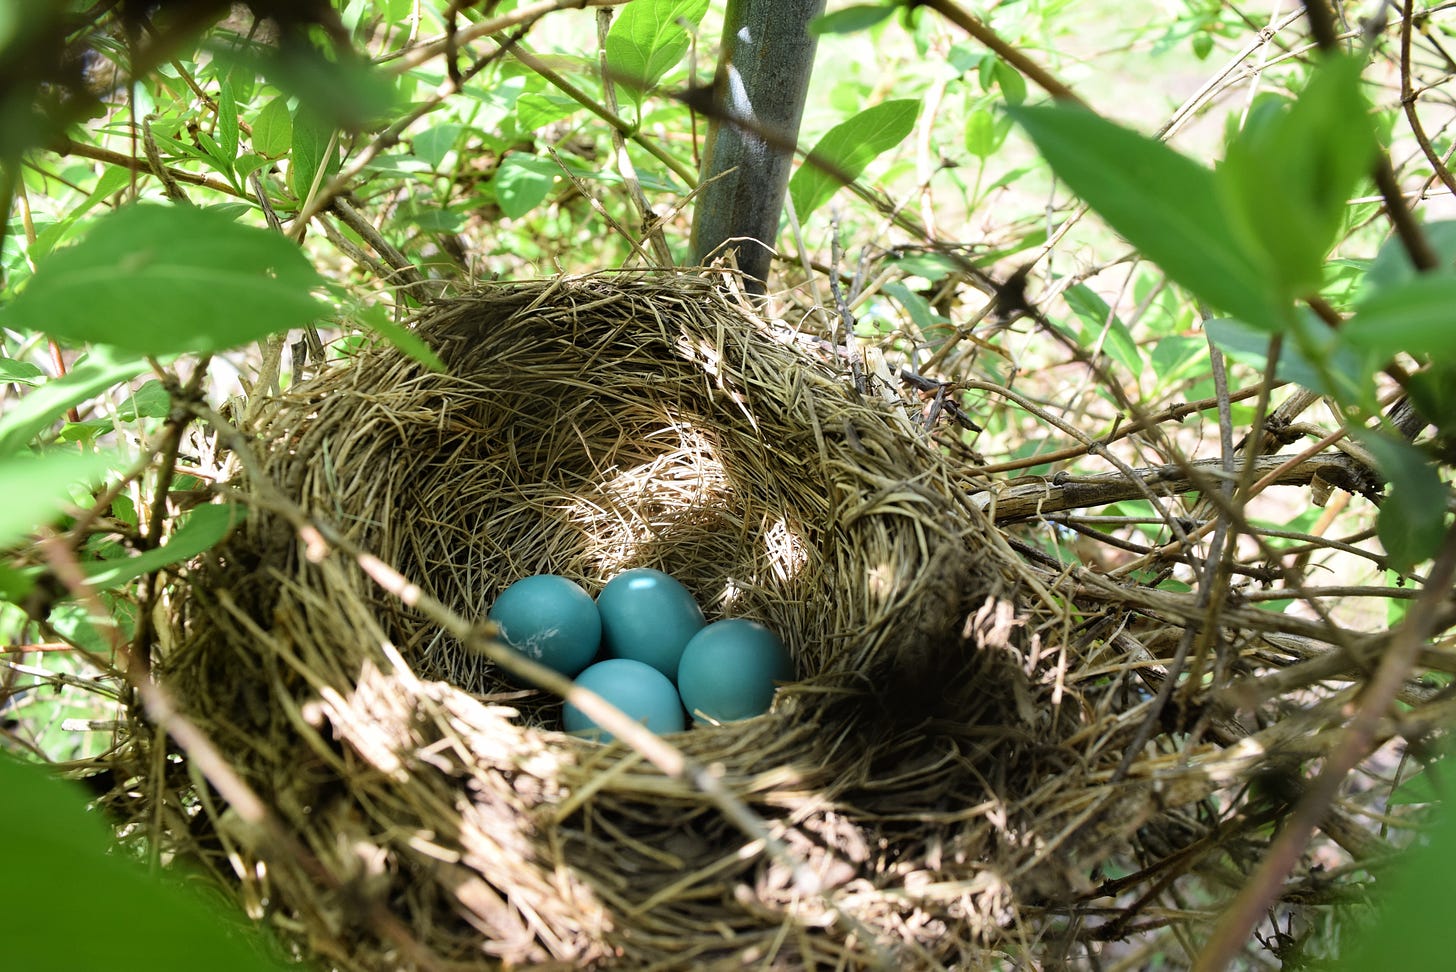 A nest with four blue robin eggs inside